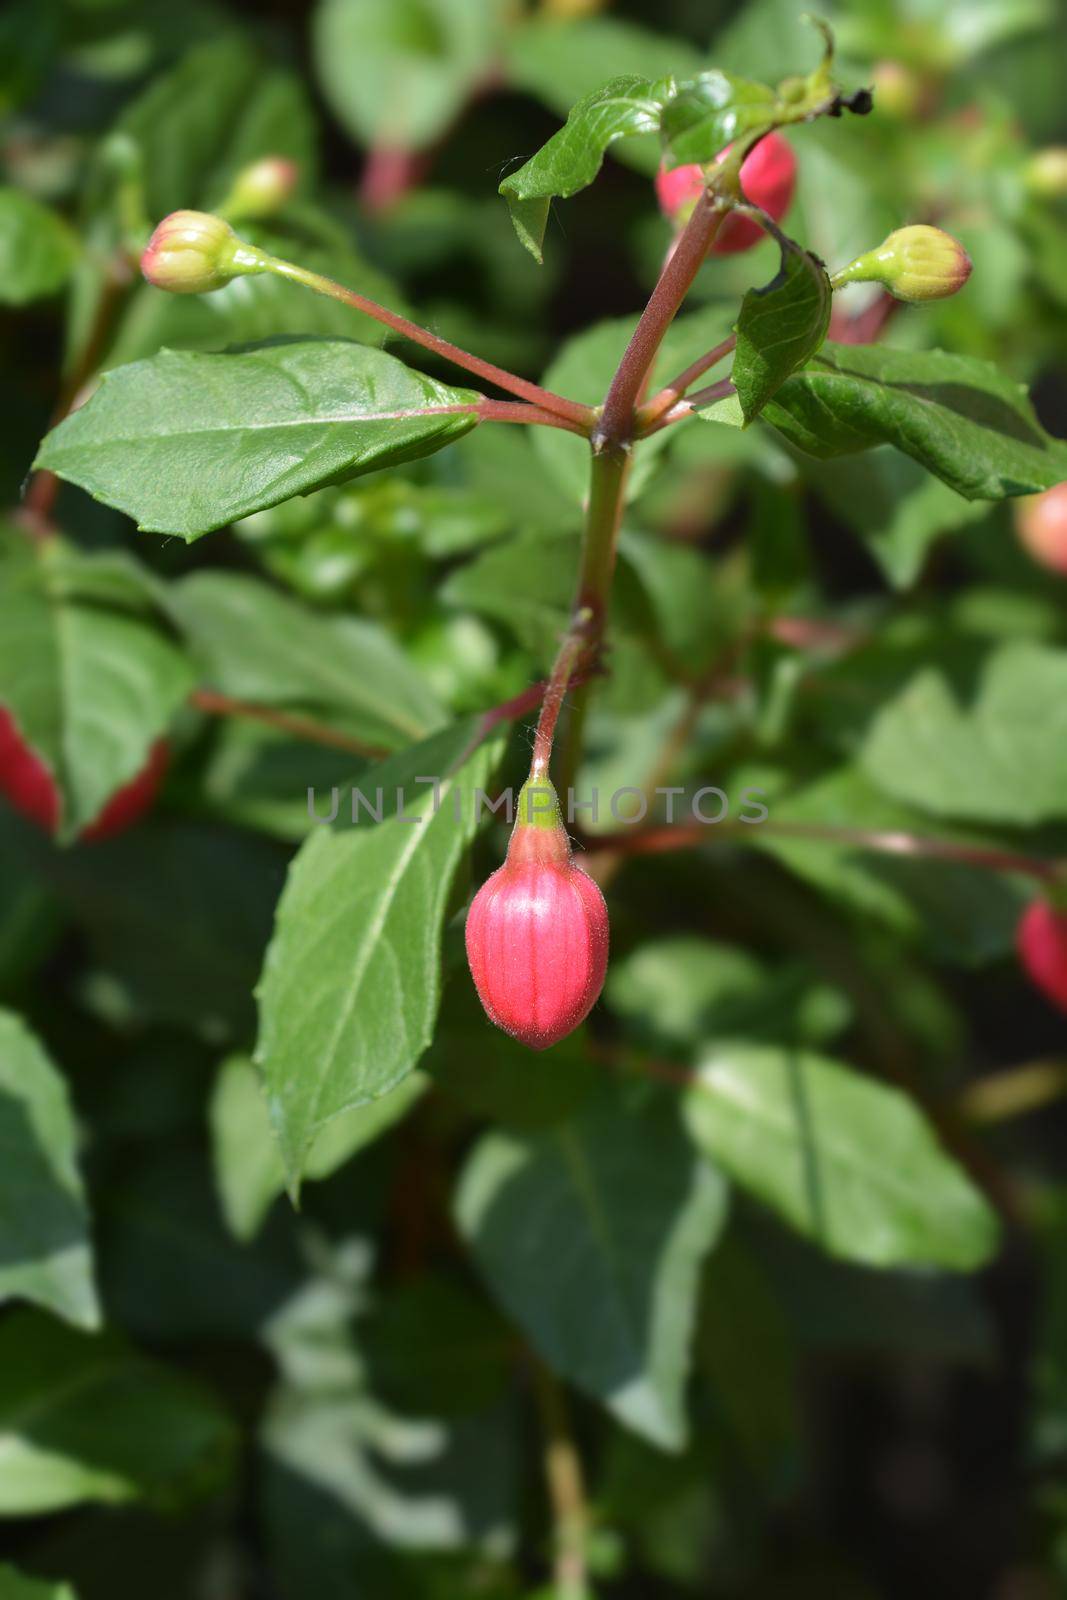 Hybrid Fuchsia flower bud - Latin name - Fuchsia x hybrida